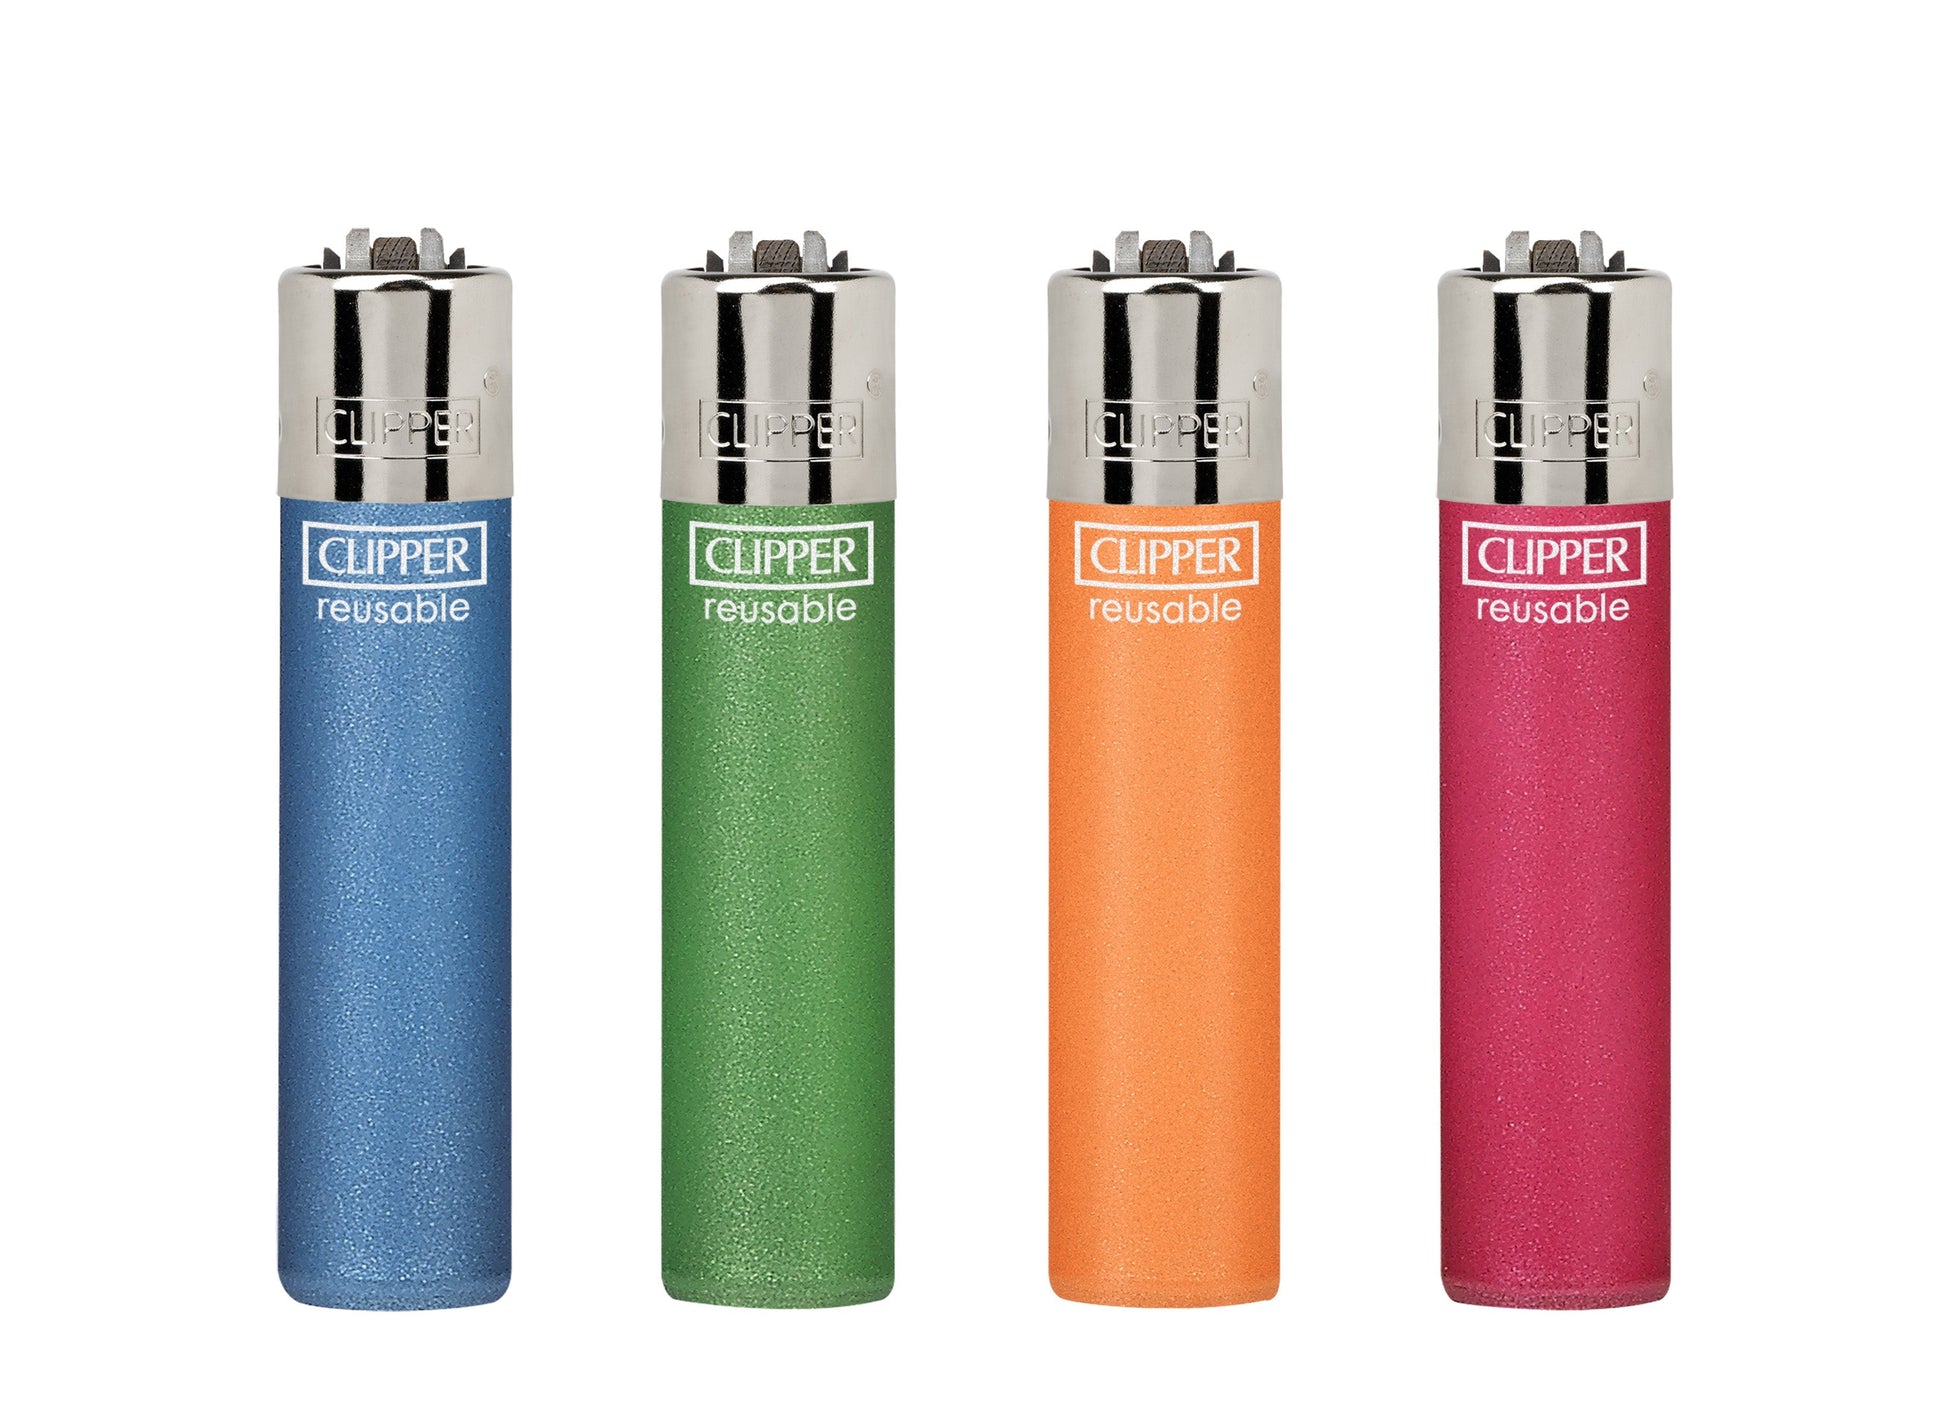 reusable lighters